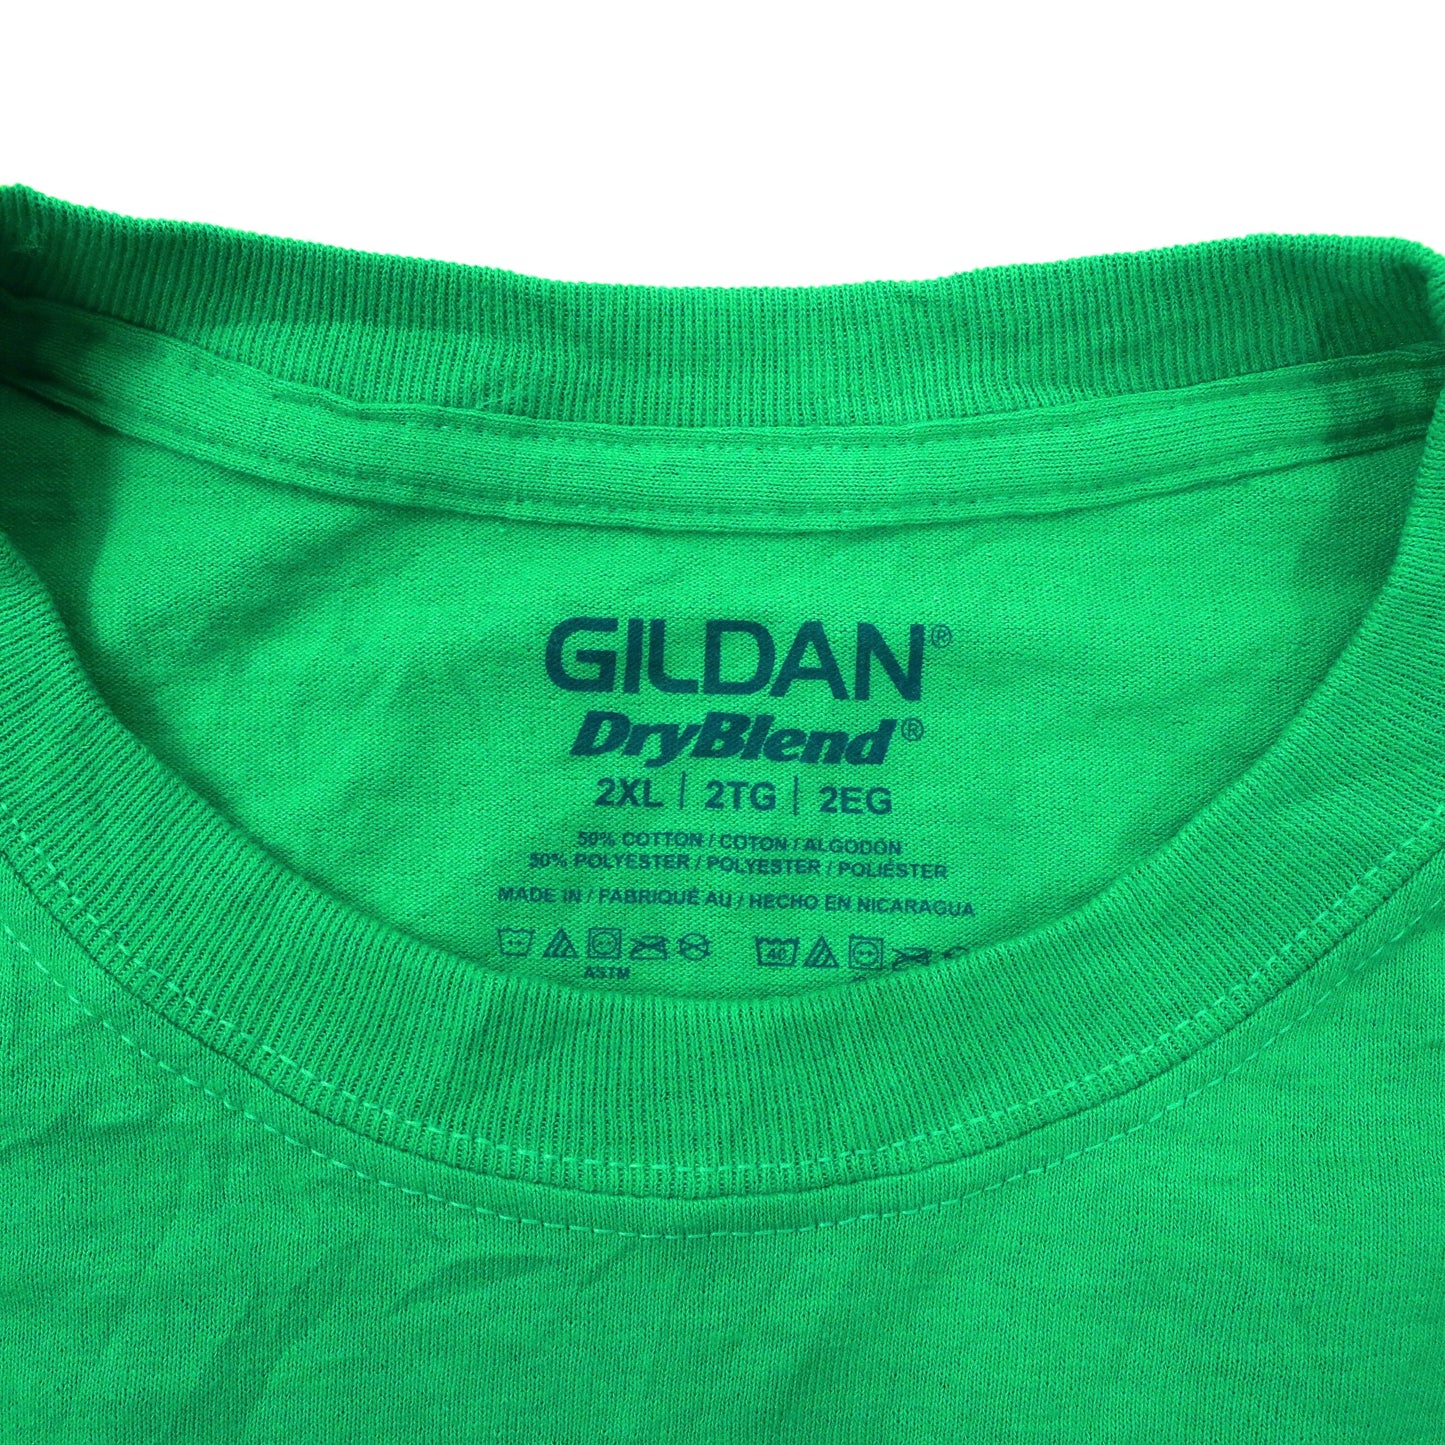 GILDAN ビッグサイズ ポップアートTシャツ 2XL グリーン コットン Johnny Laffuto's Italiano ニカラグア製